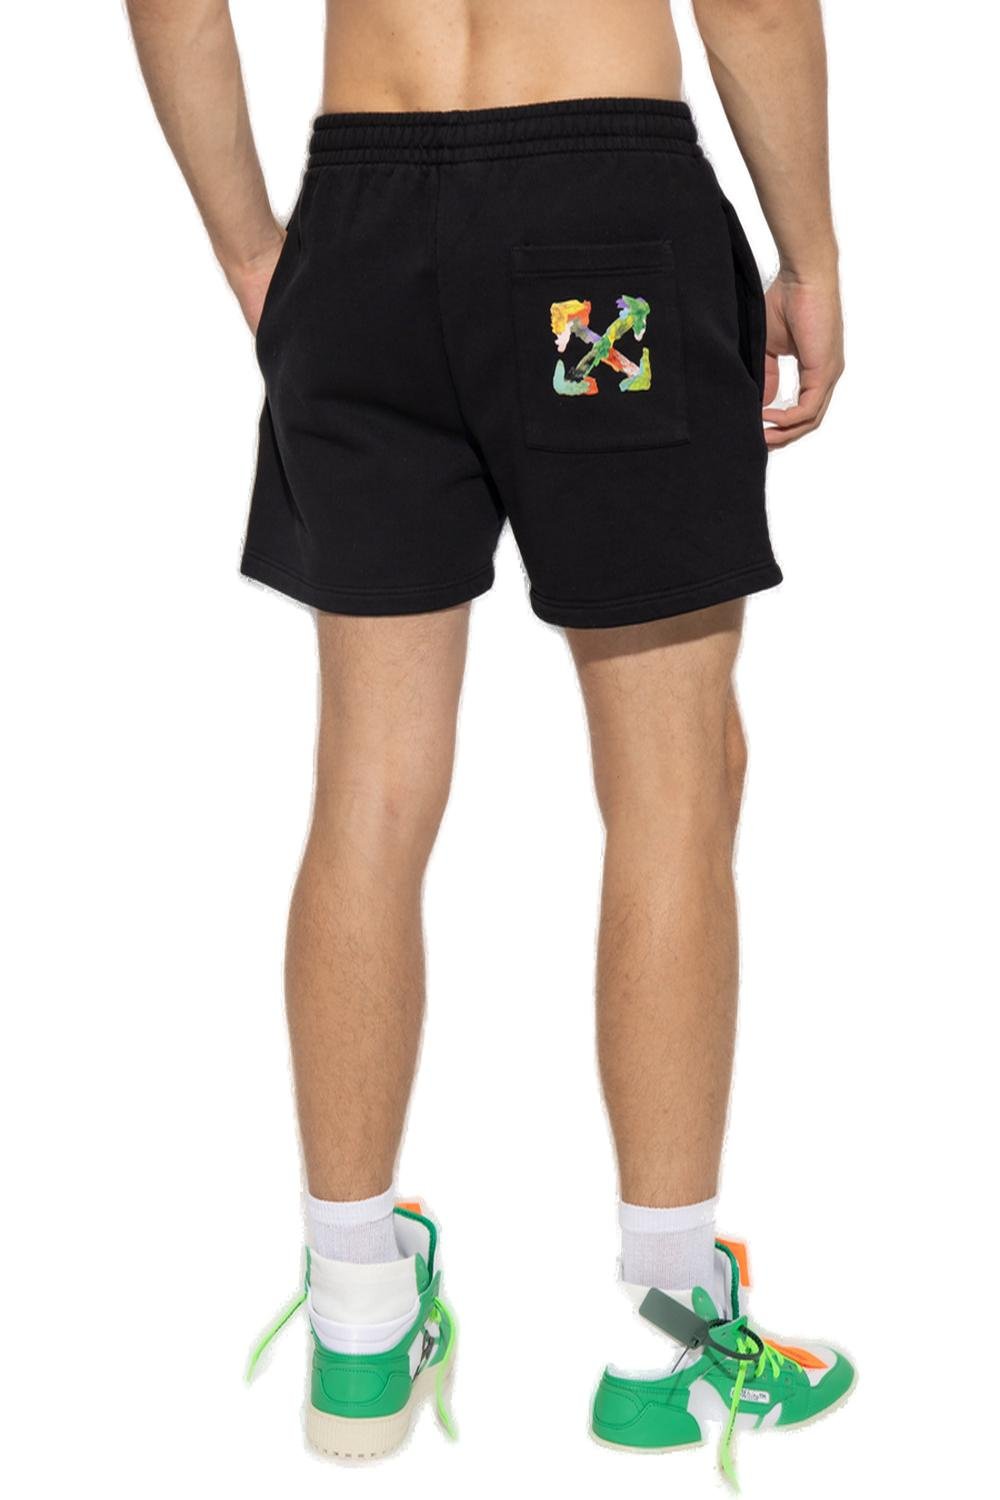 Off-White Logo Printed High Waist Shorts